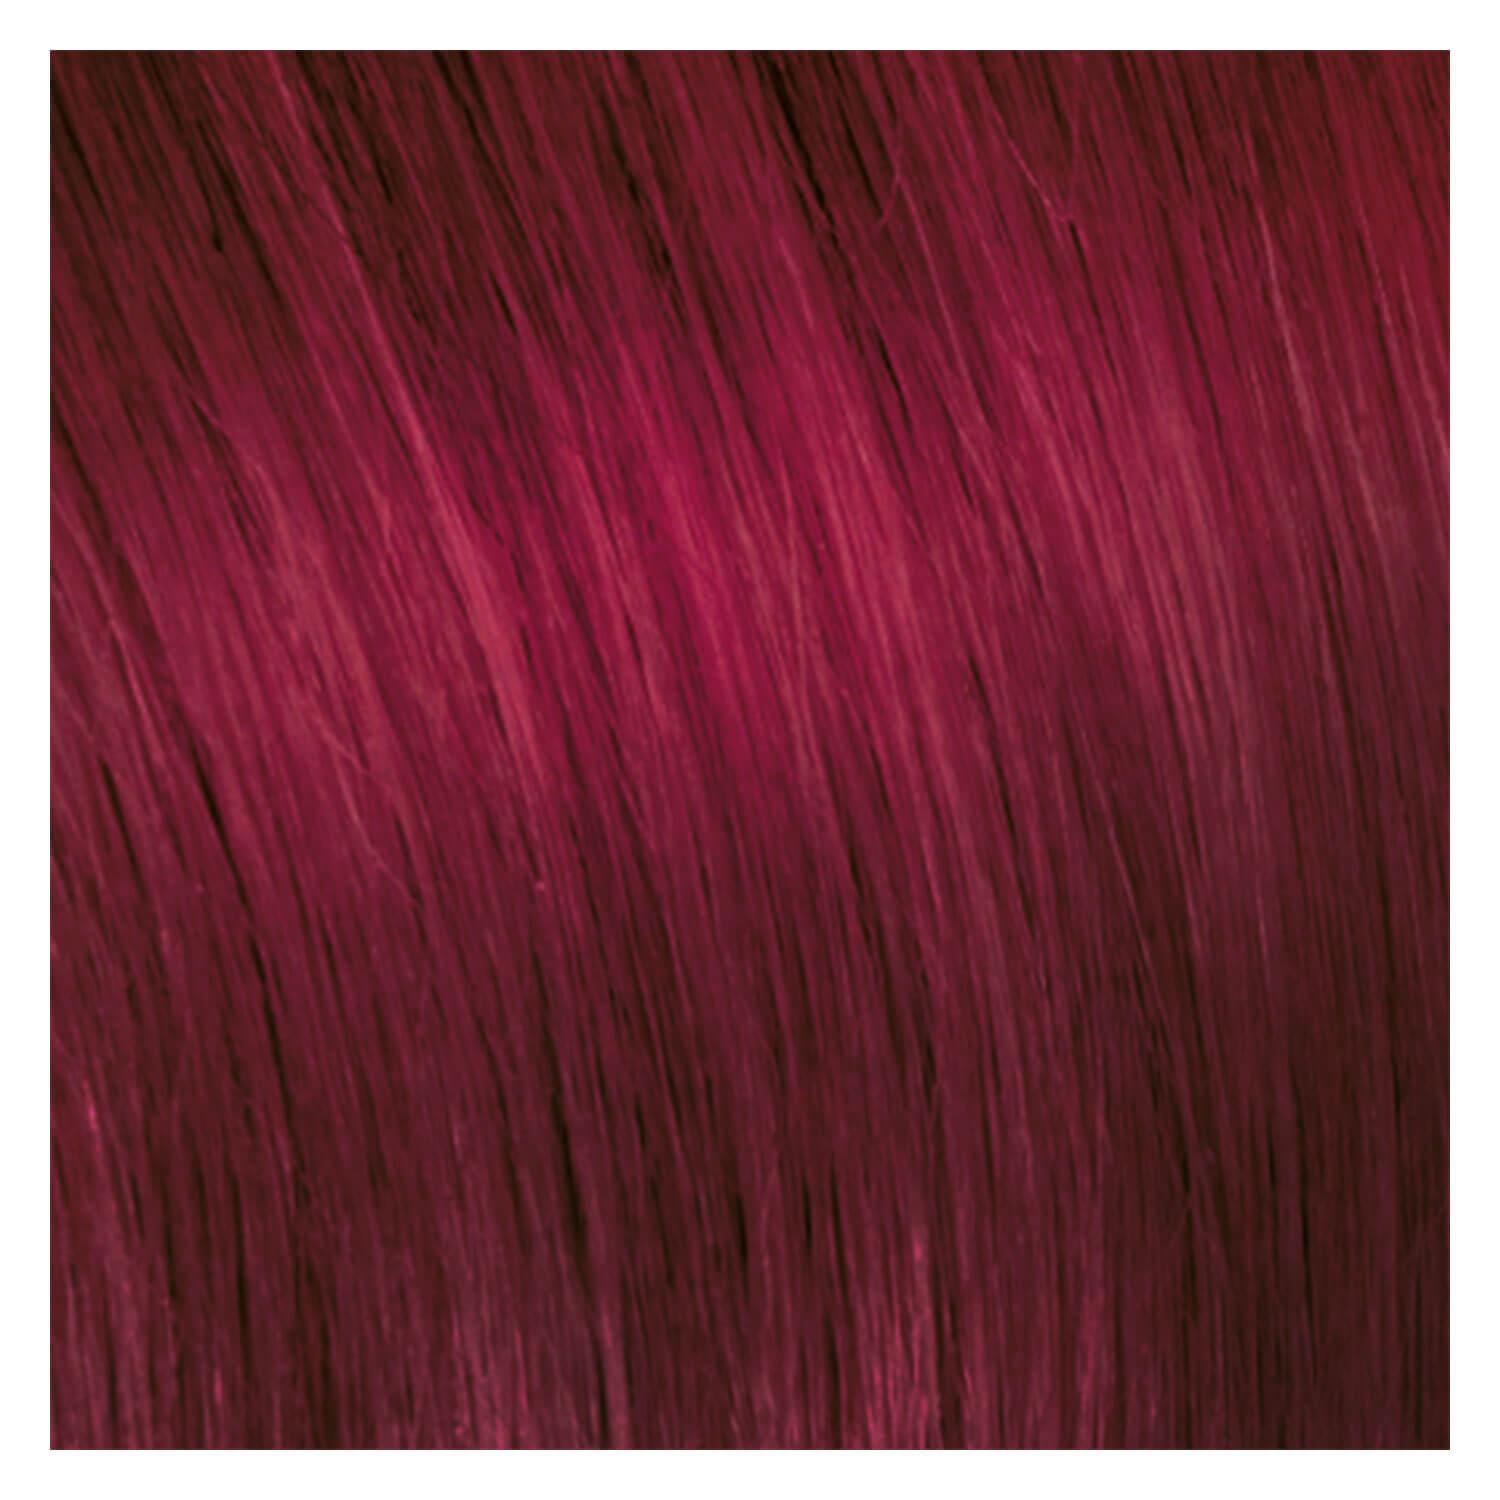 SHE Bonding-System Hair Extensions Wavy - 530 Rubinrot 55/60cm